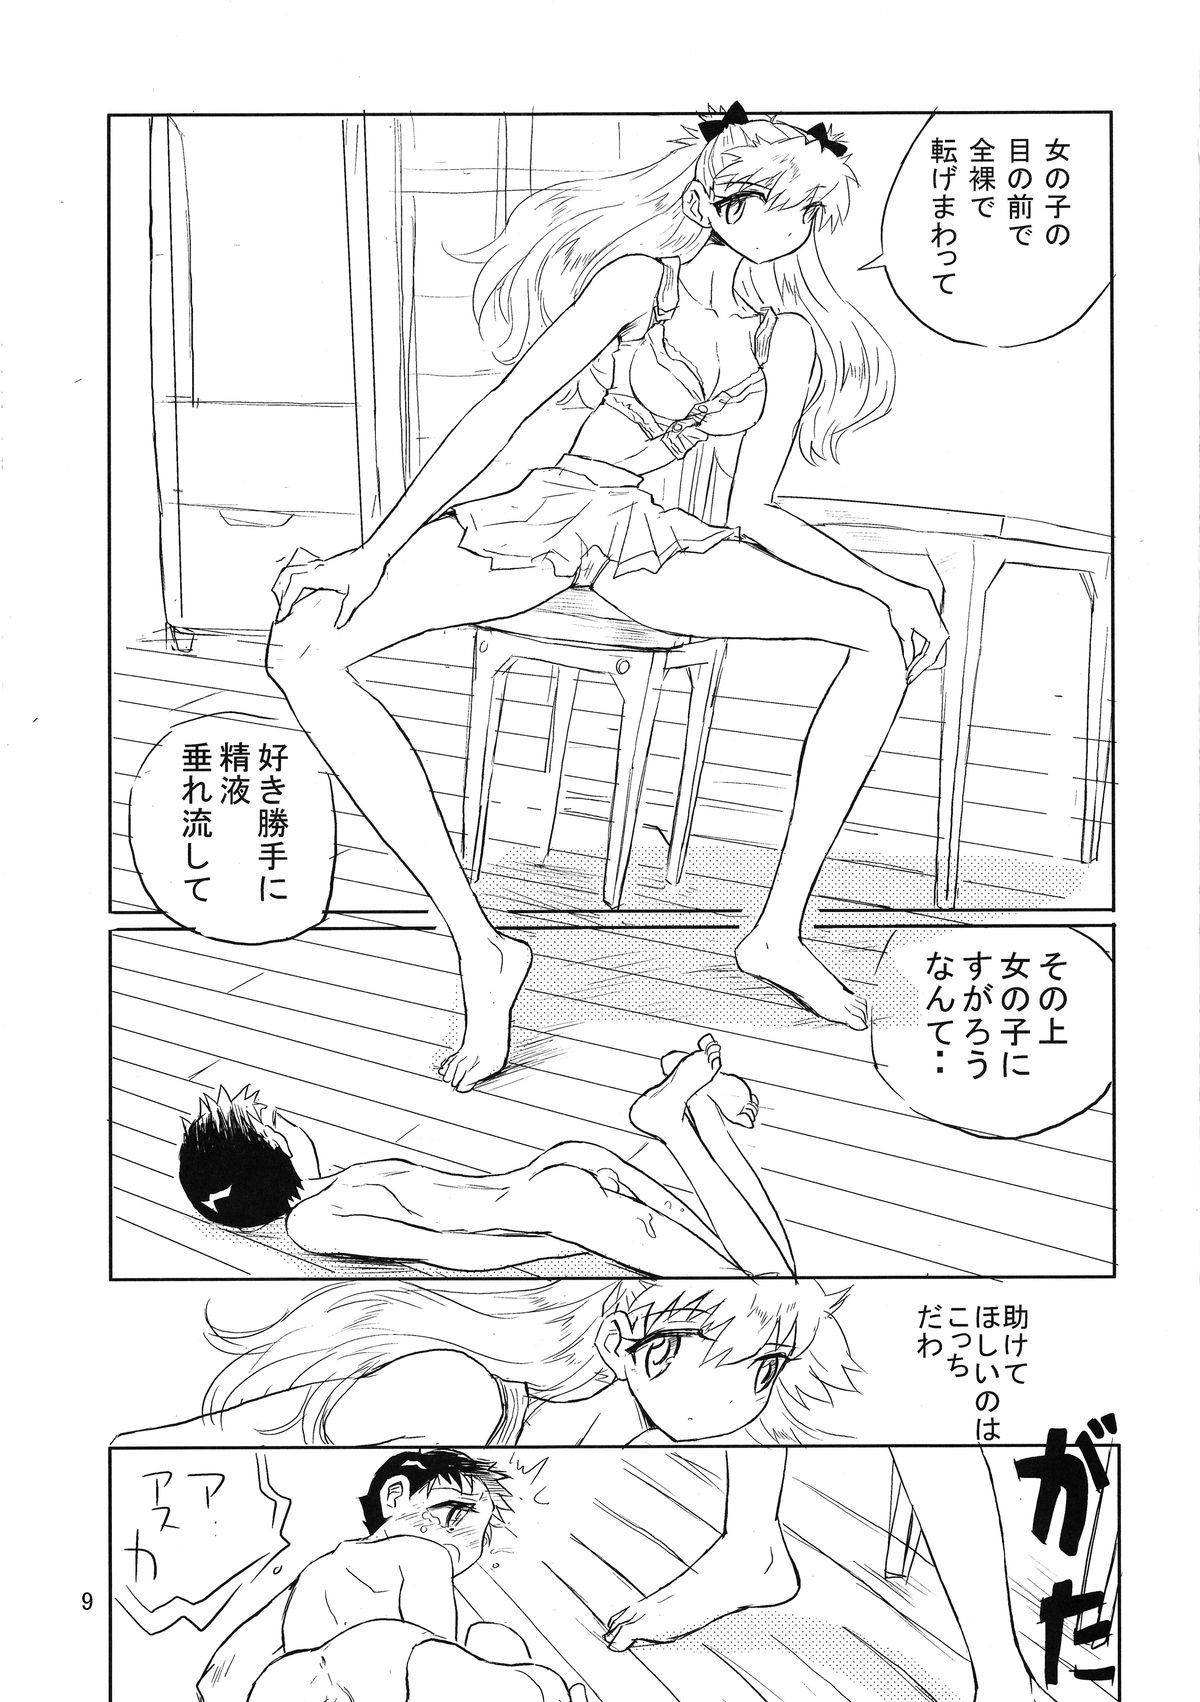 Curvy Otoko no Tatakai 11 - Neon genesis evangelion Anal - Page 8